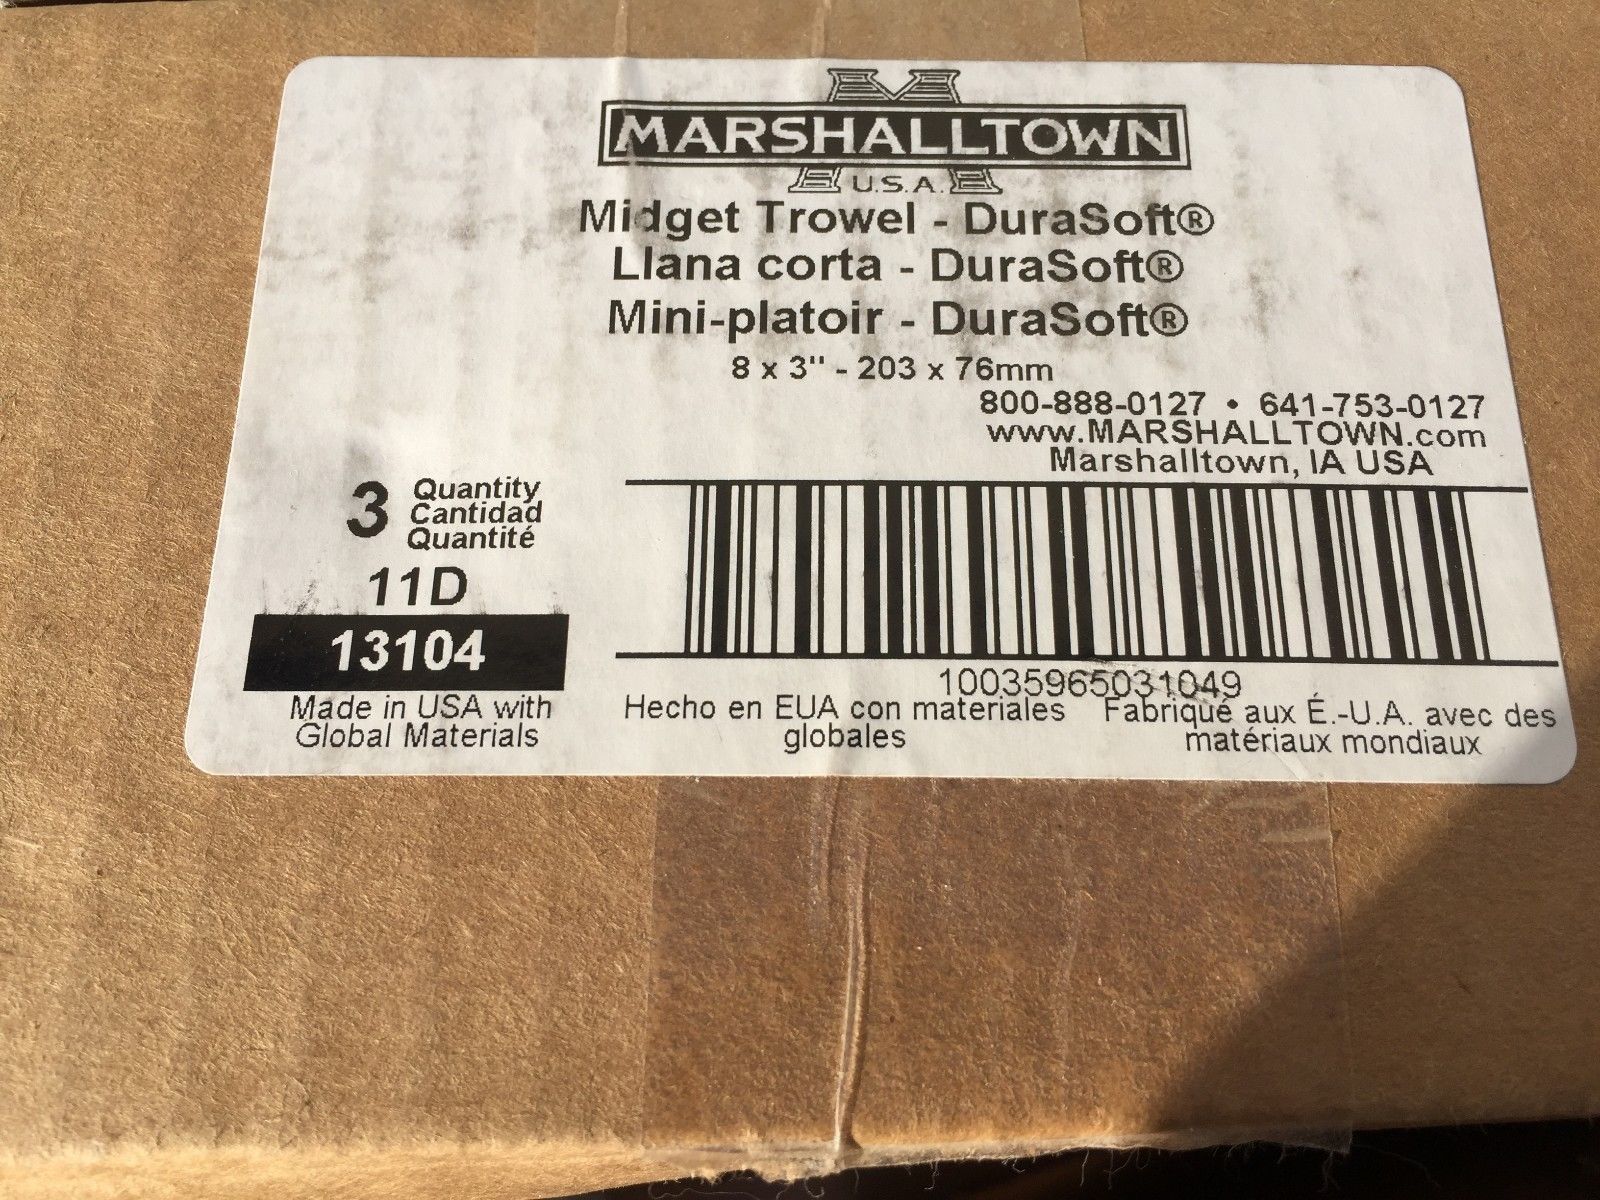 Midget from marshalltown iowa